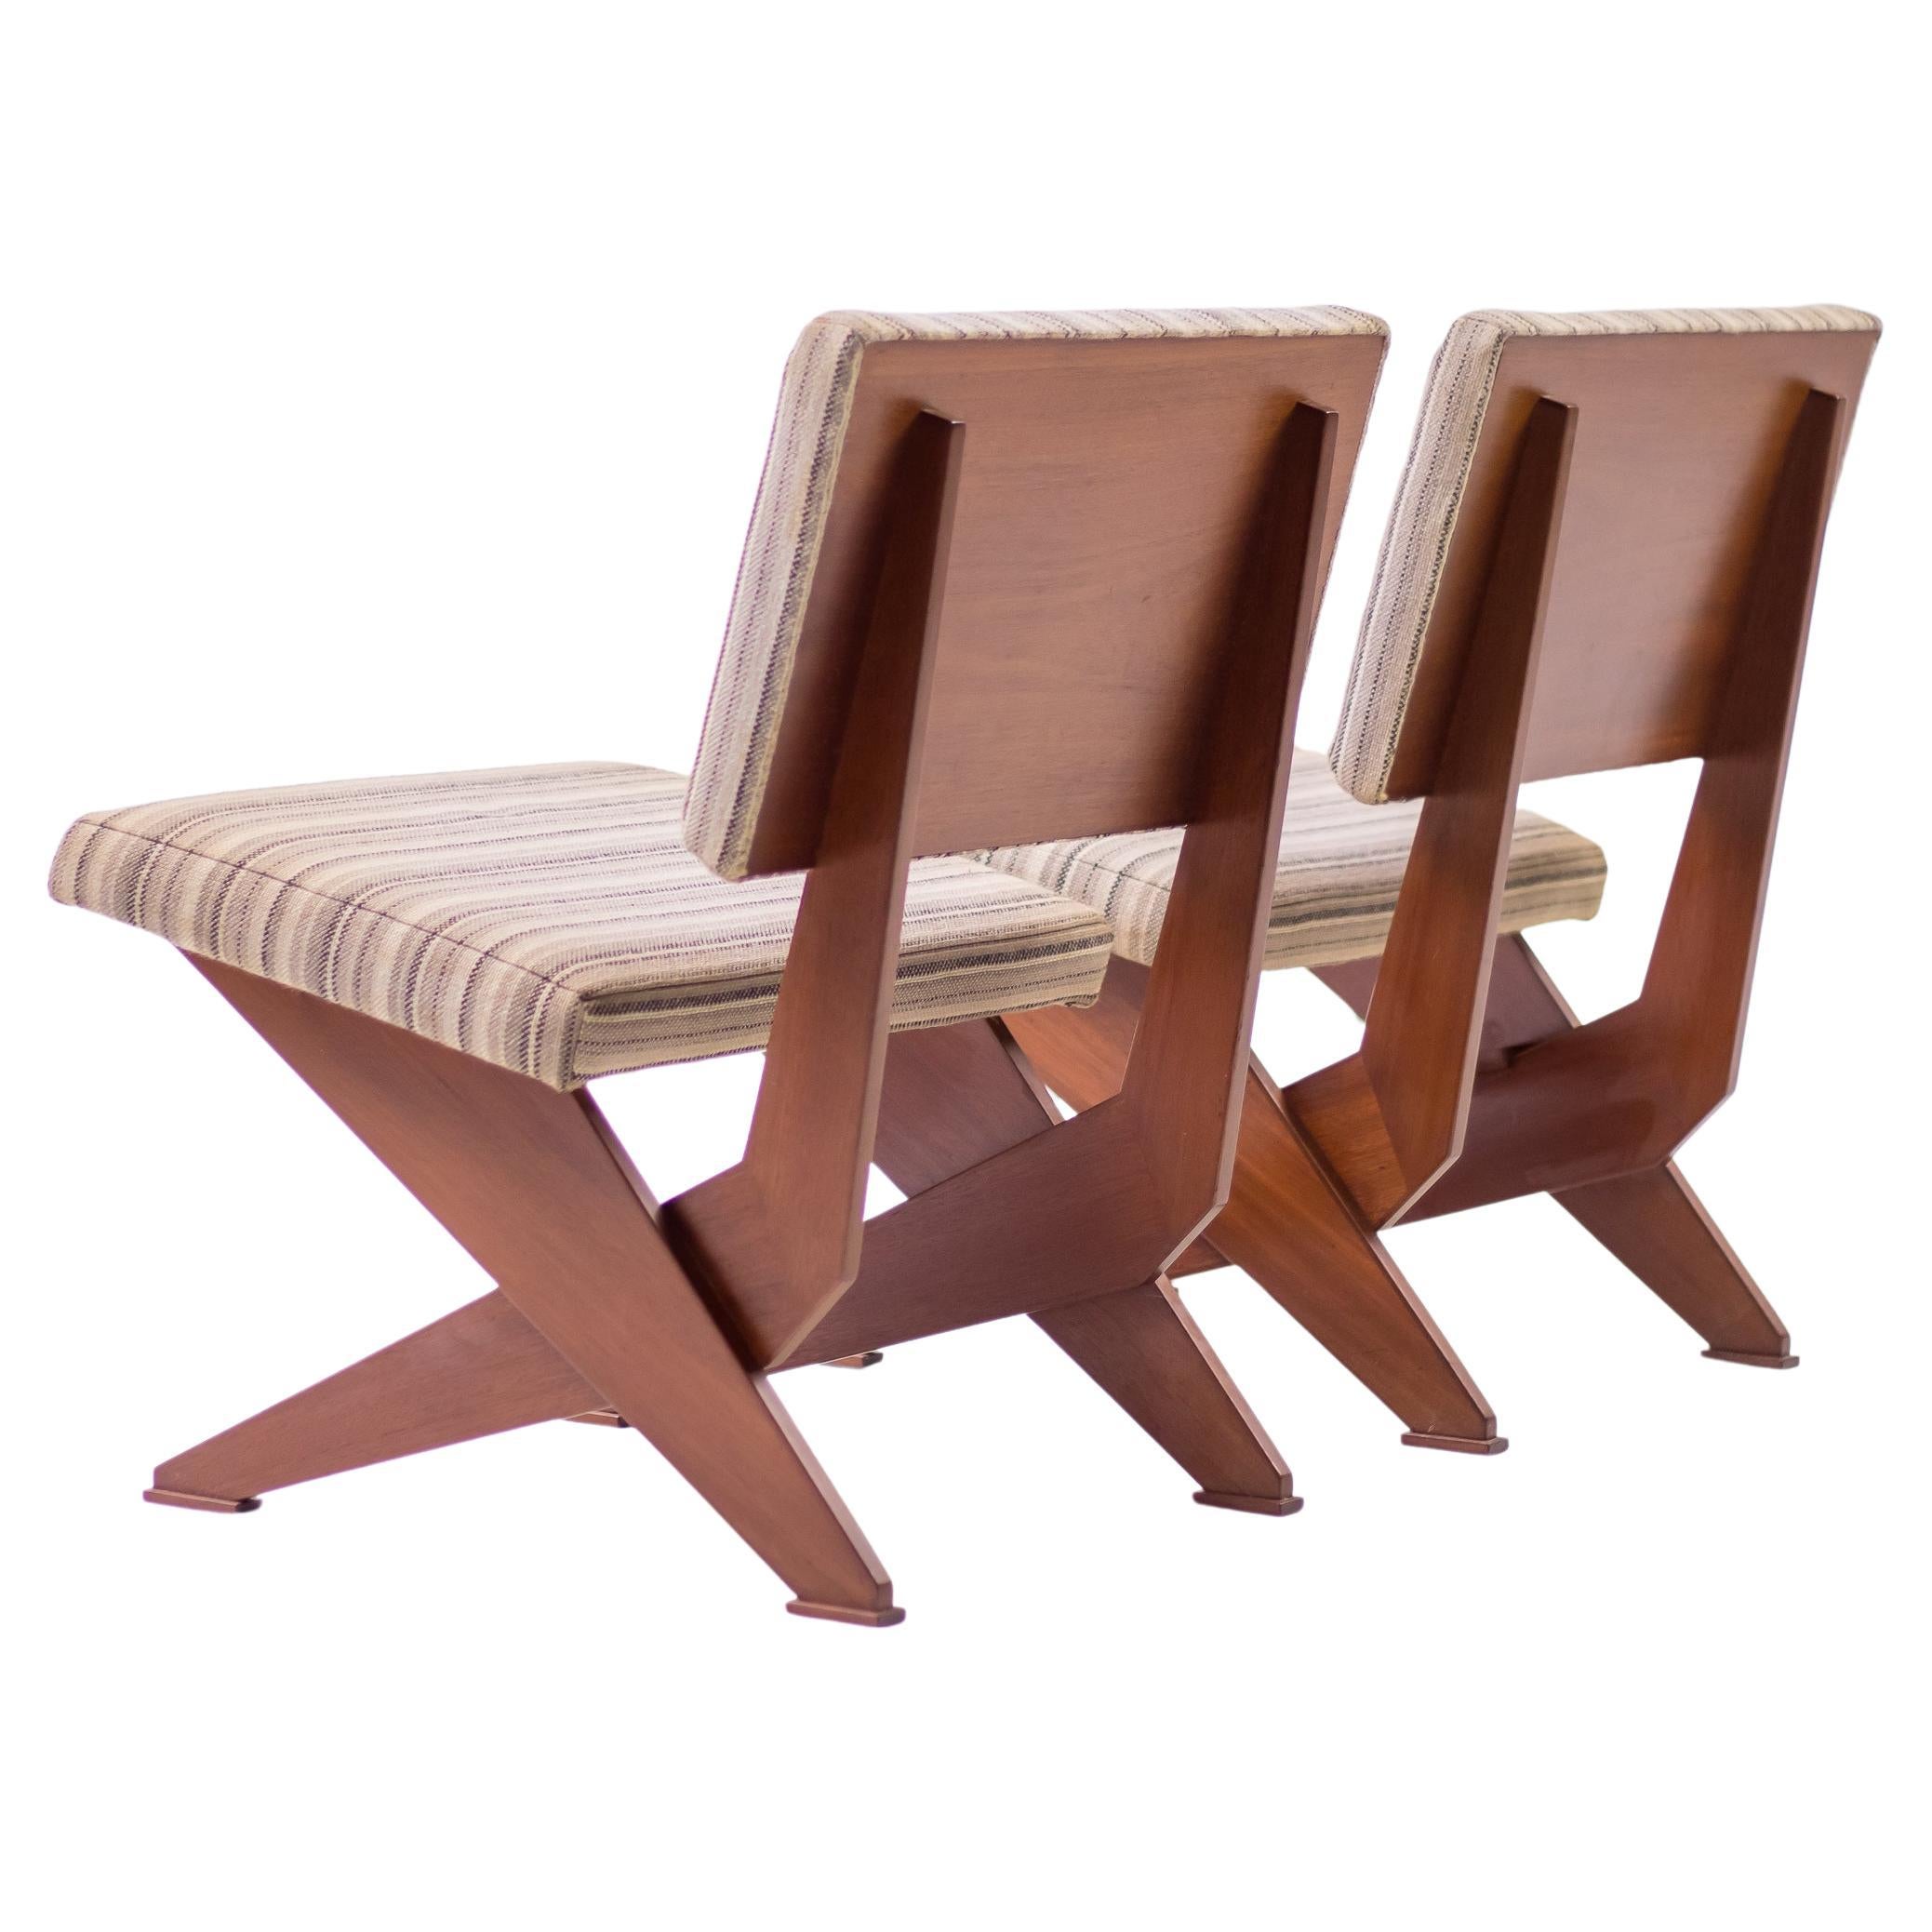 Pair of Mid-Century Modern Scissor Chairs